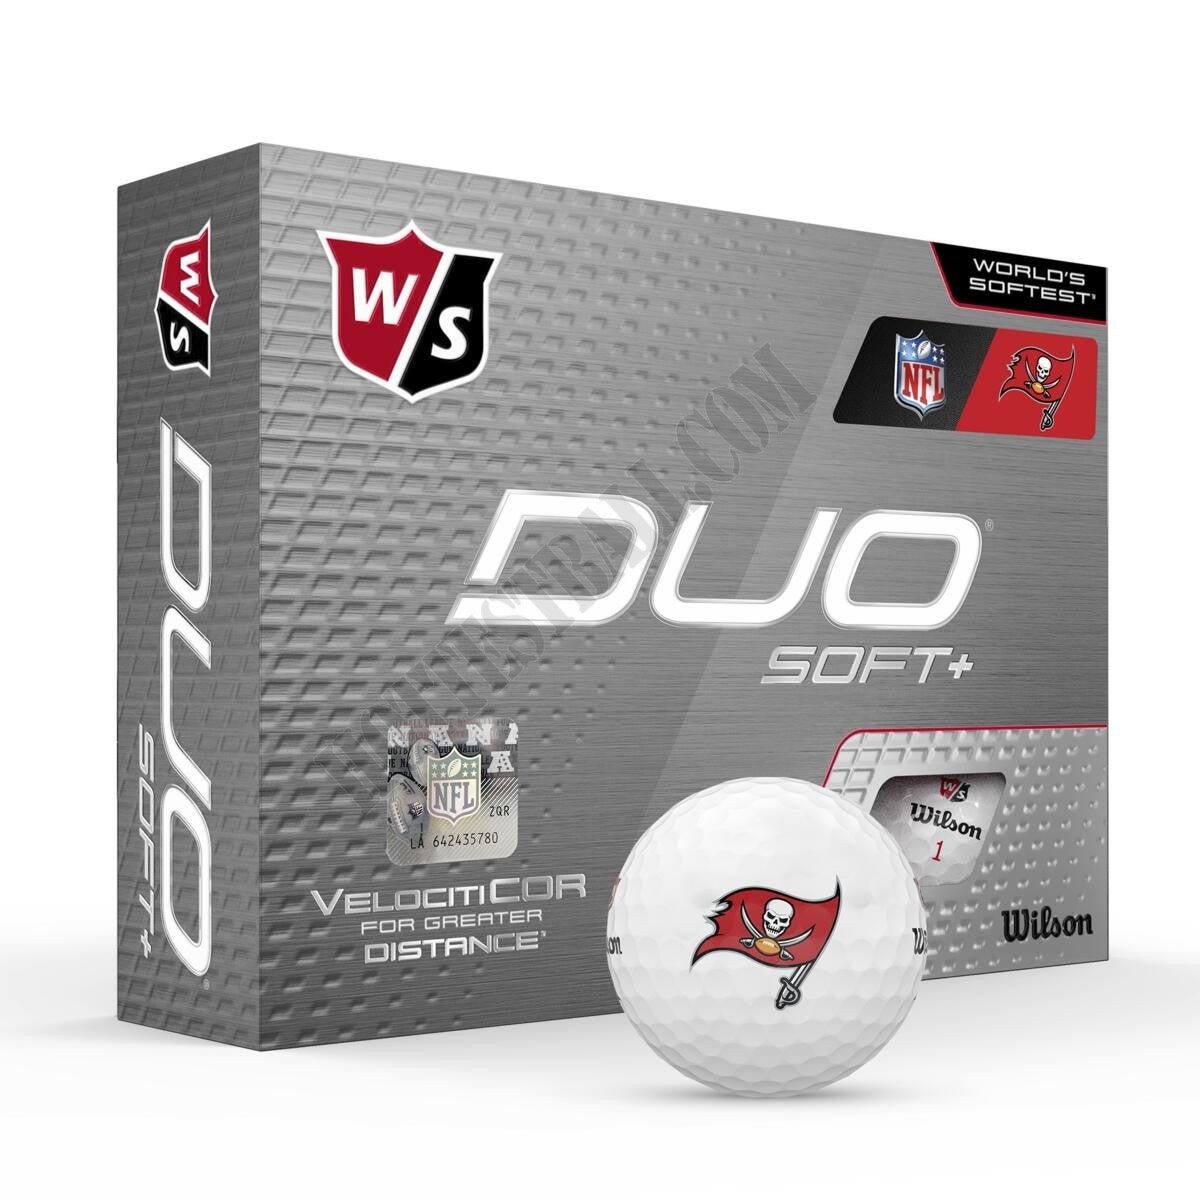 Duo Soft+ NFL Golf Balls - Tampa Bay Buccaneers ● Wilson Promotions - Duo Soft+ NFL Golf Balls - Tampa Bay Buccaneers ● Wilson Promotions